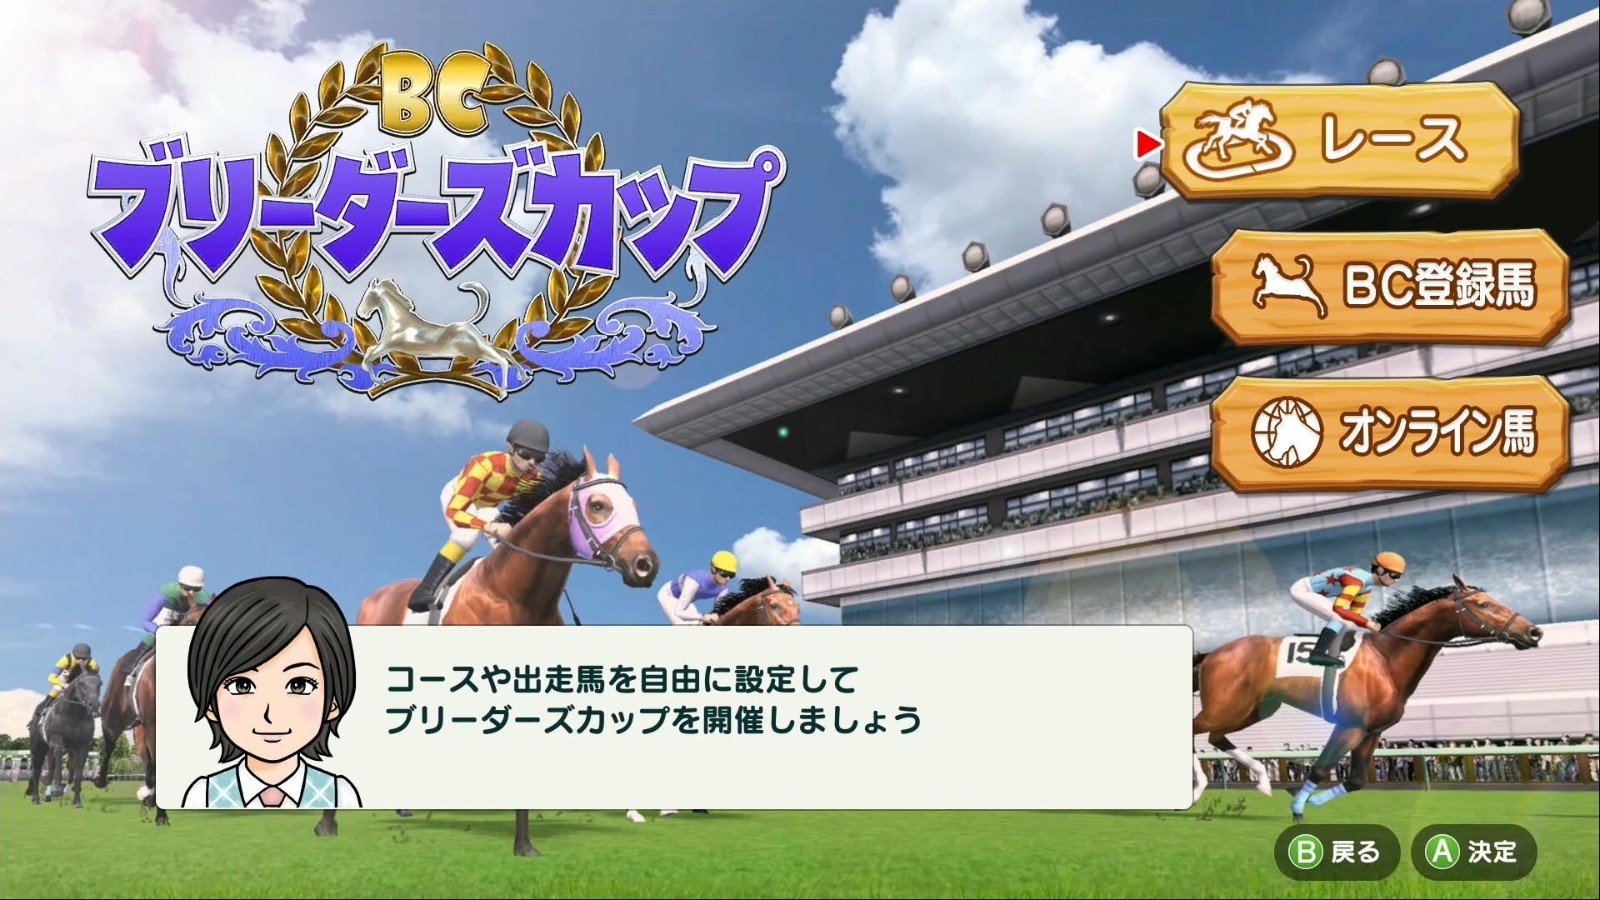 Derby Stallion, Derby Stallion Switch, release date, gameplay, trailer, price, Nintendo Switch, Switch, Japan, Game Addict, Land Ho